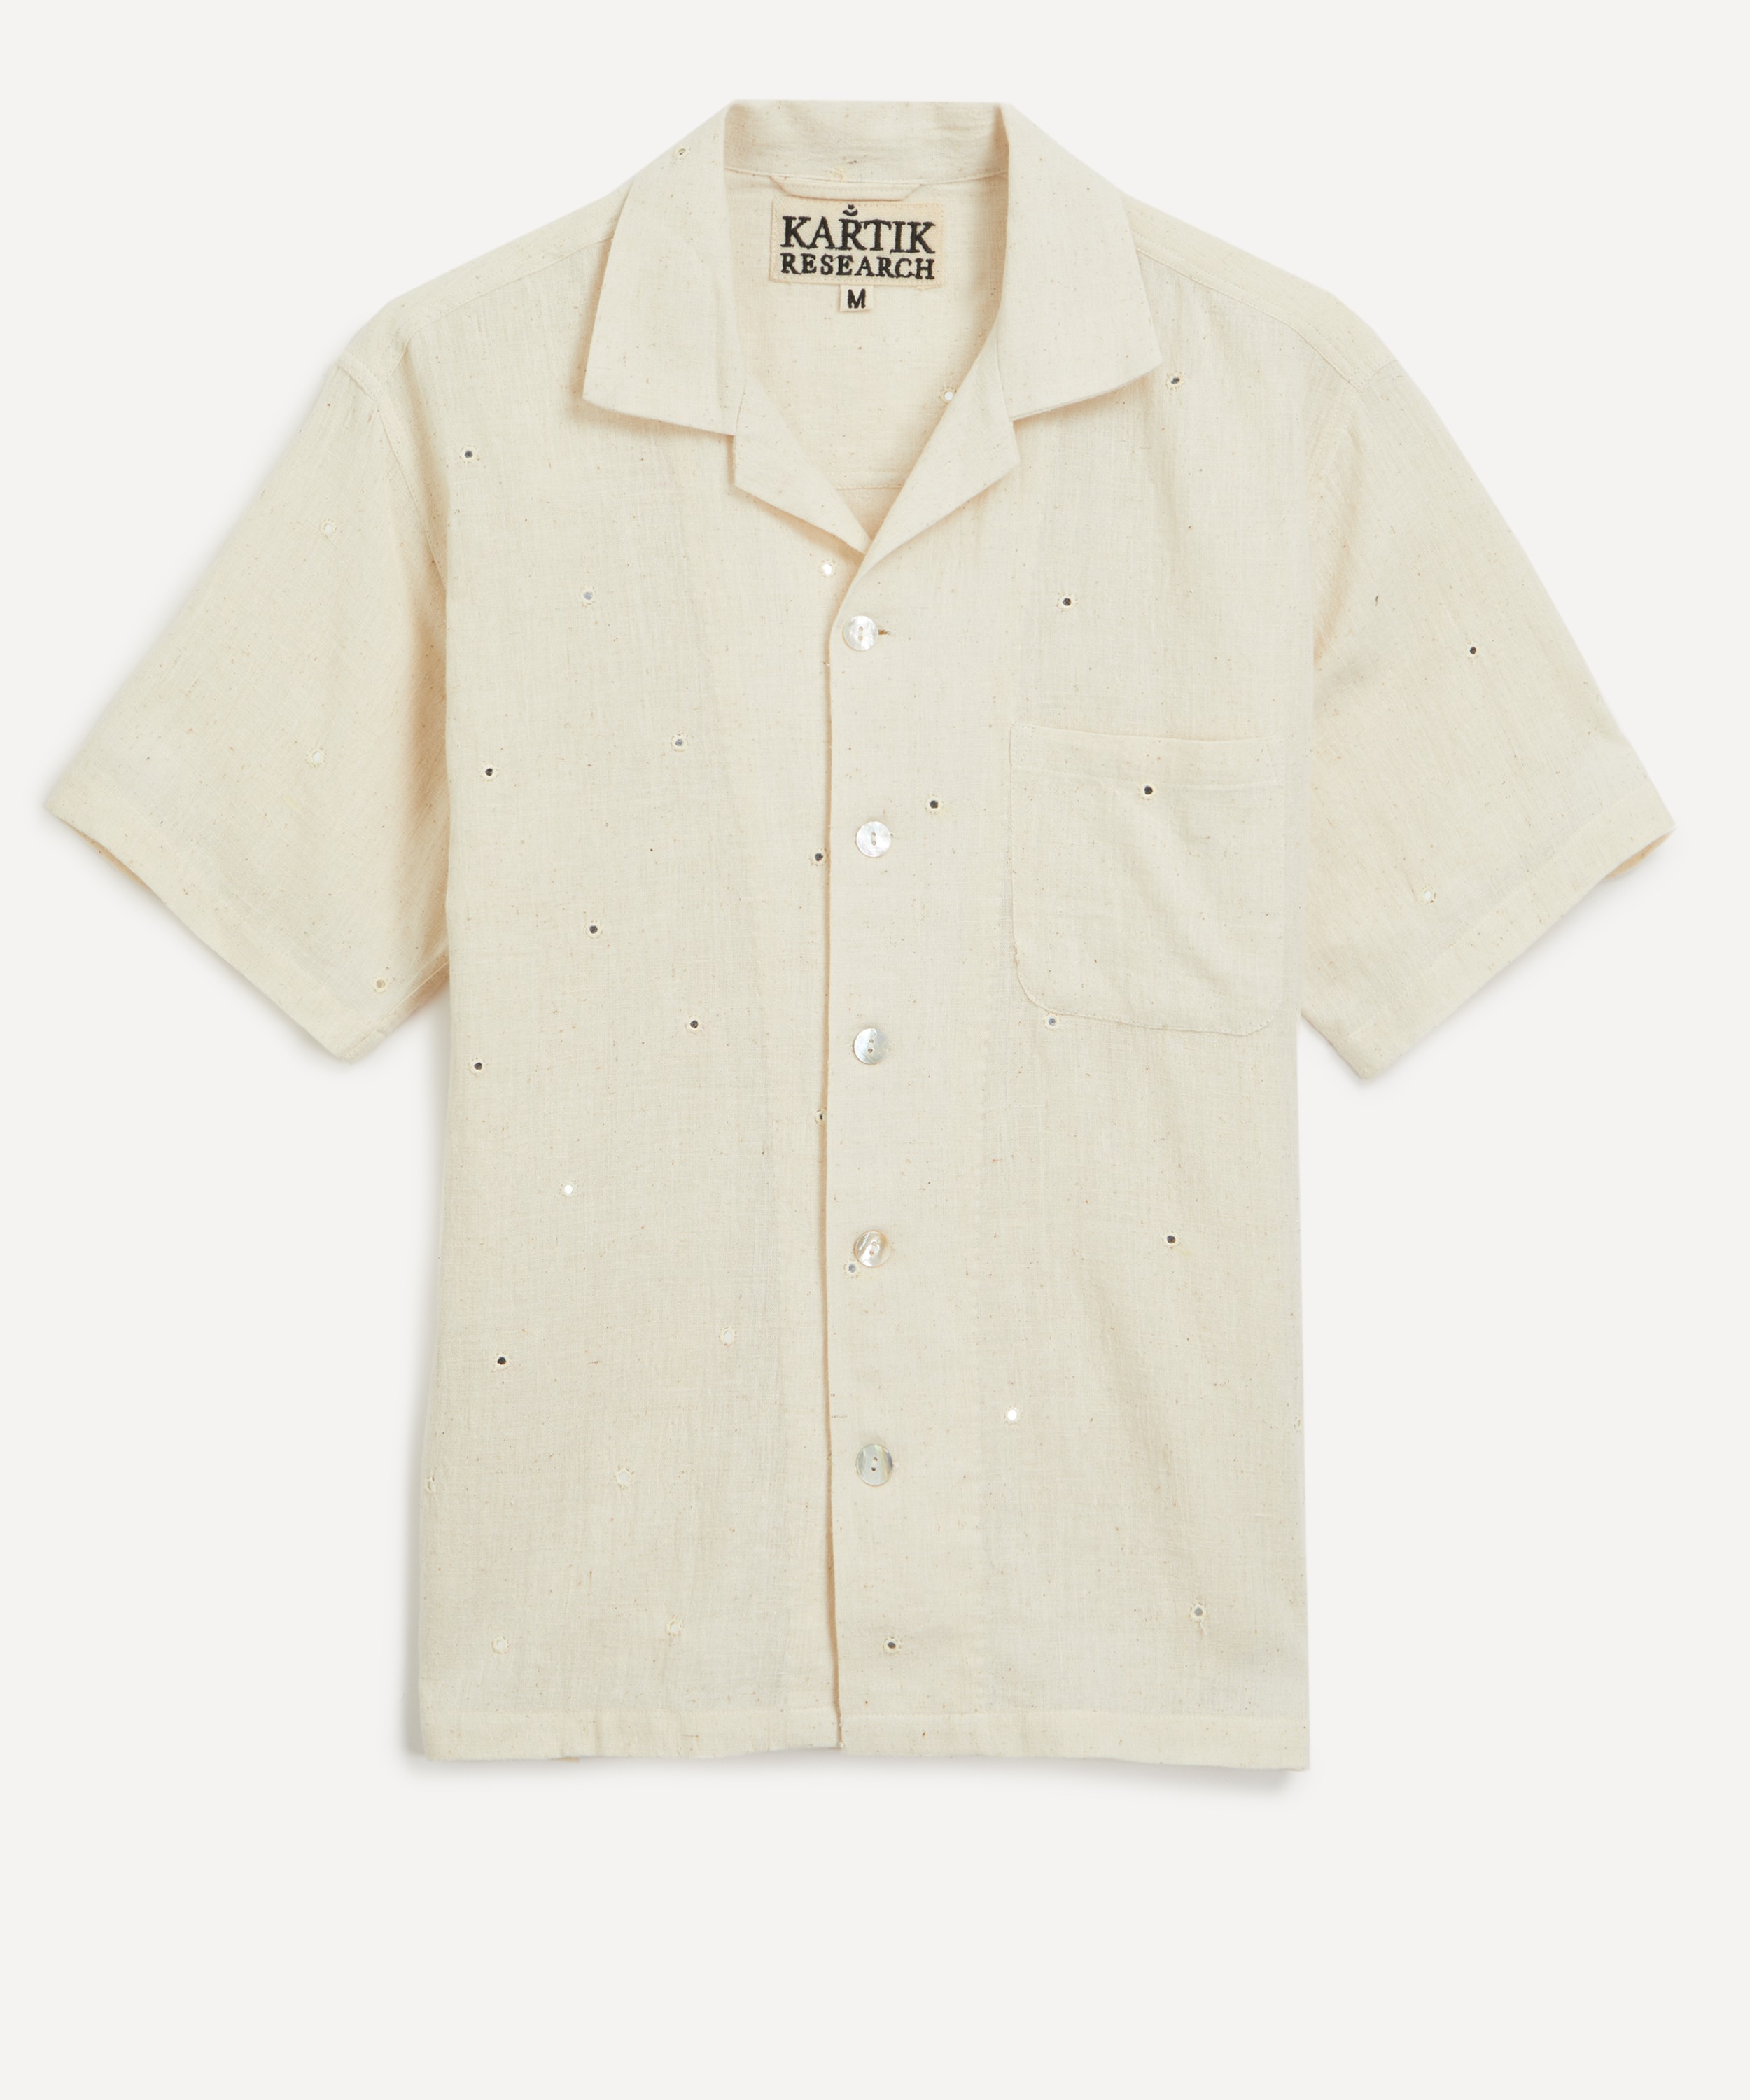 Kartik Research - Mirror-Embroidered Cotton-Gauze Shirt